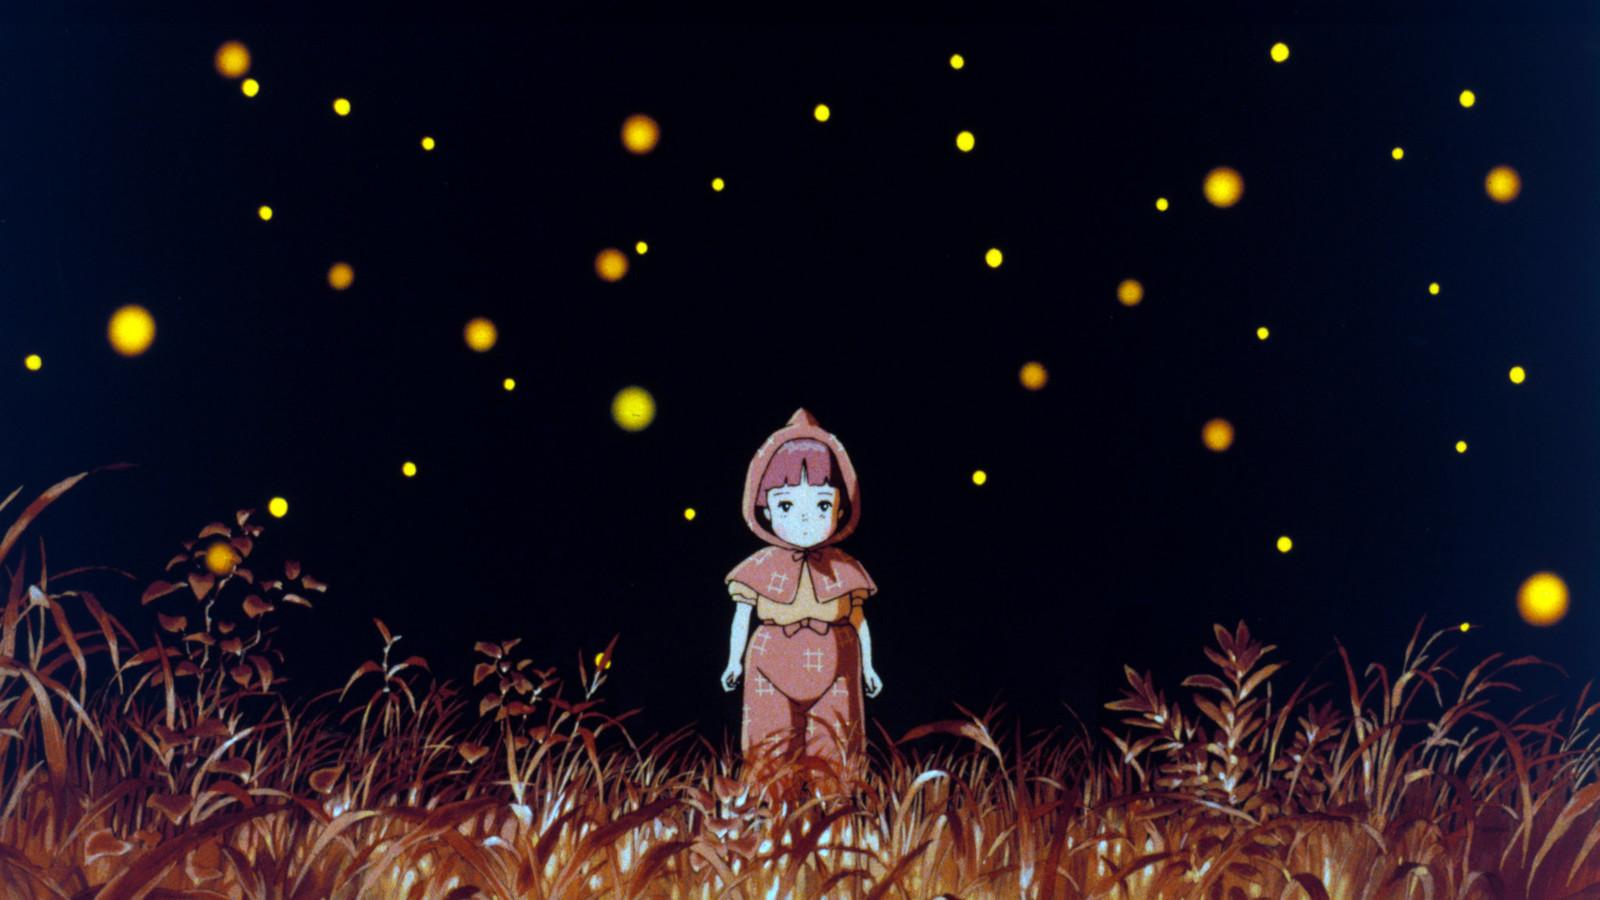 Studio Ghibli's Grave of the Fireflies